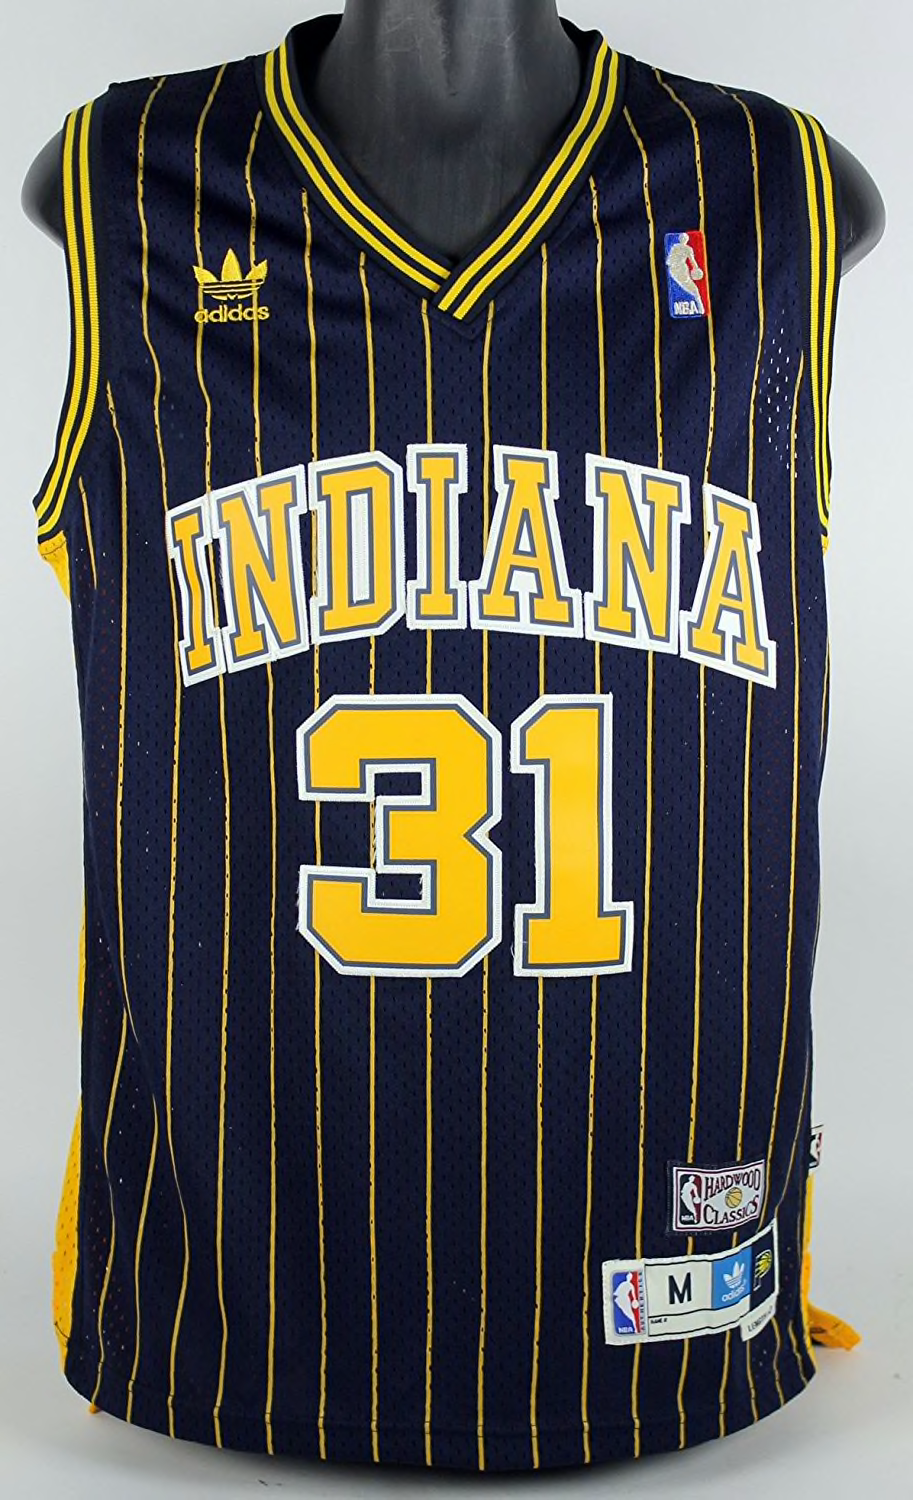 Indiana Pacers NBA Reggie Miller Adidas Team Jersey